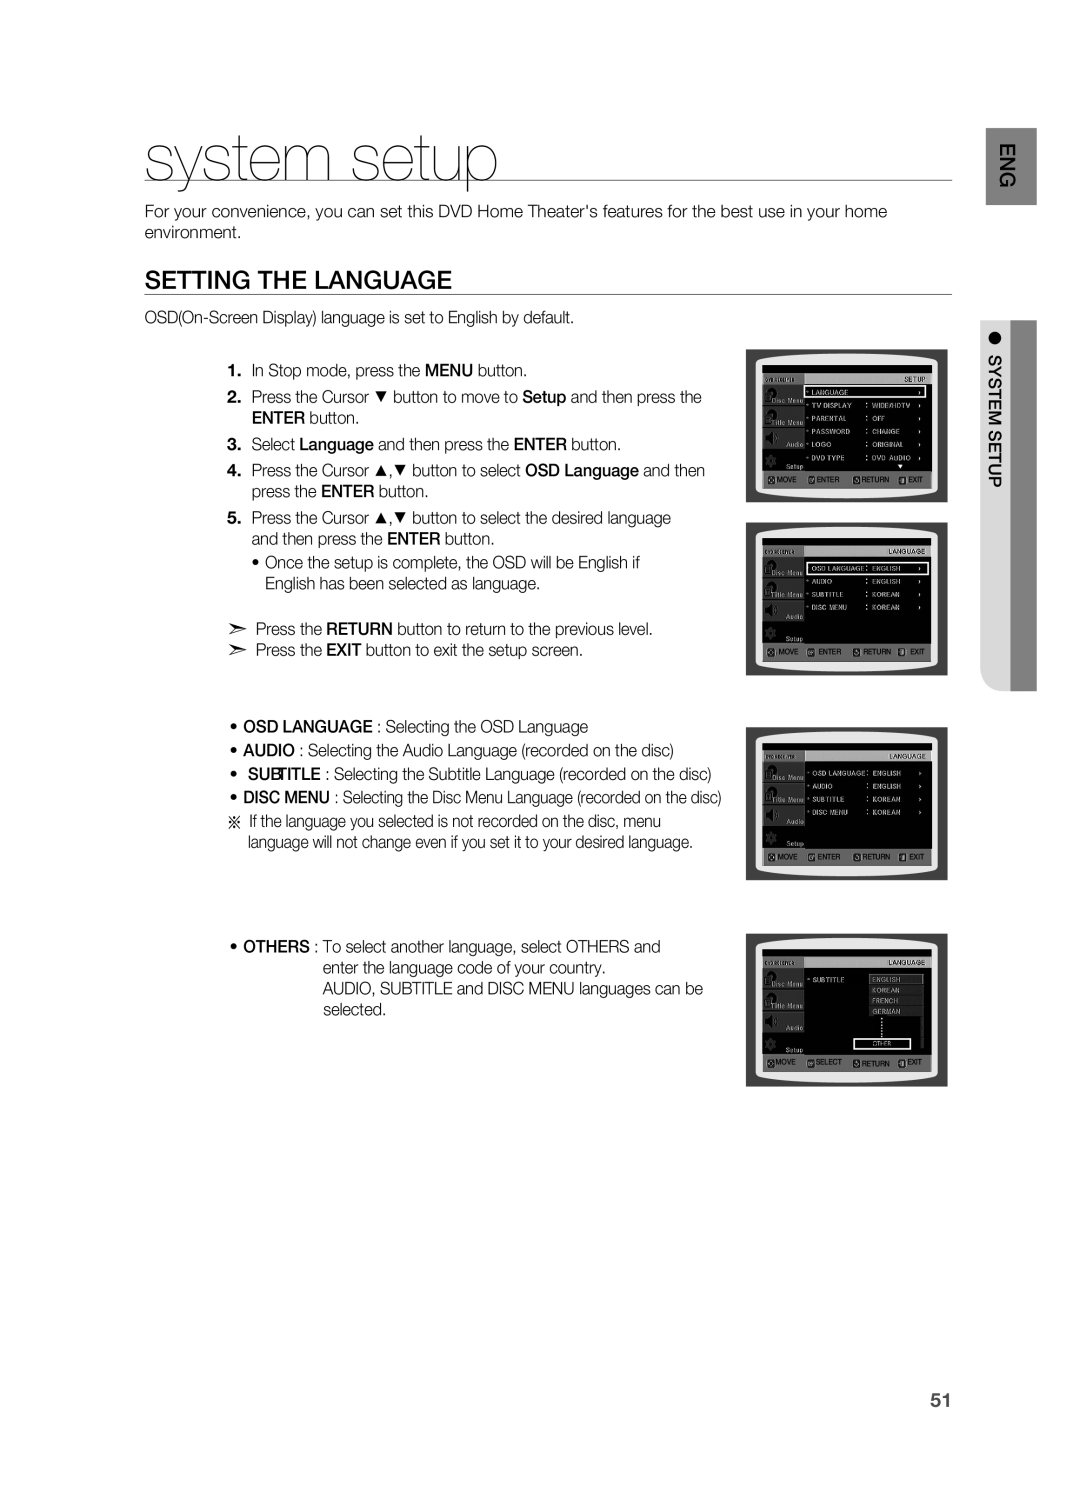 Samsung HT-TZ312 manual system setup, Setting the Language 